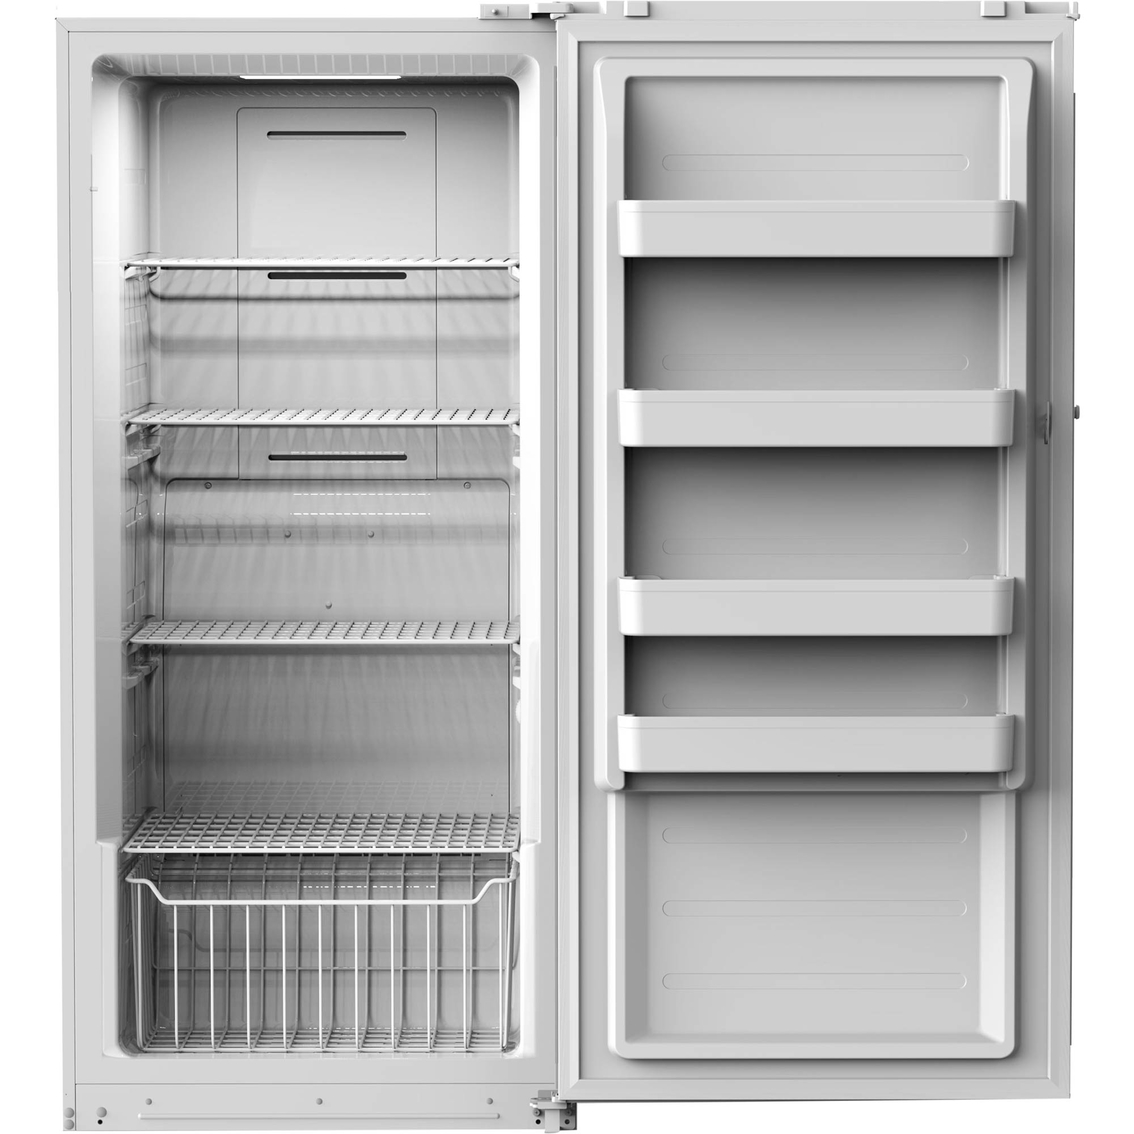 Midea 14 Cu Ft Upright Freezer Freezers Furniture And Appliances Free